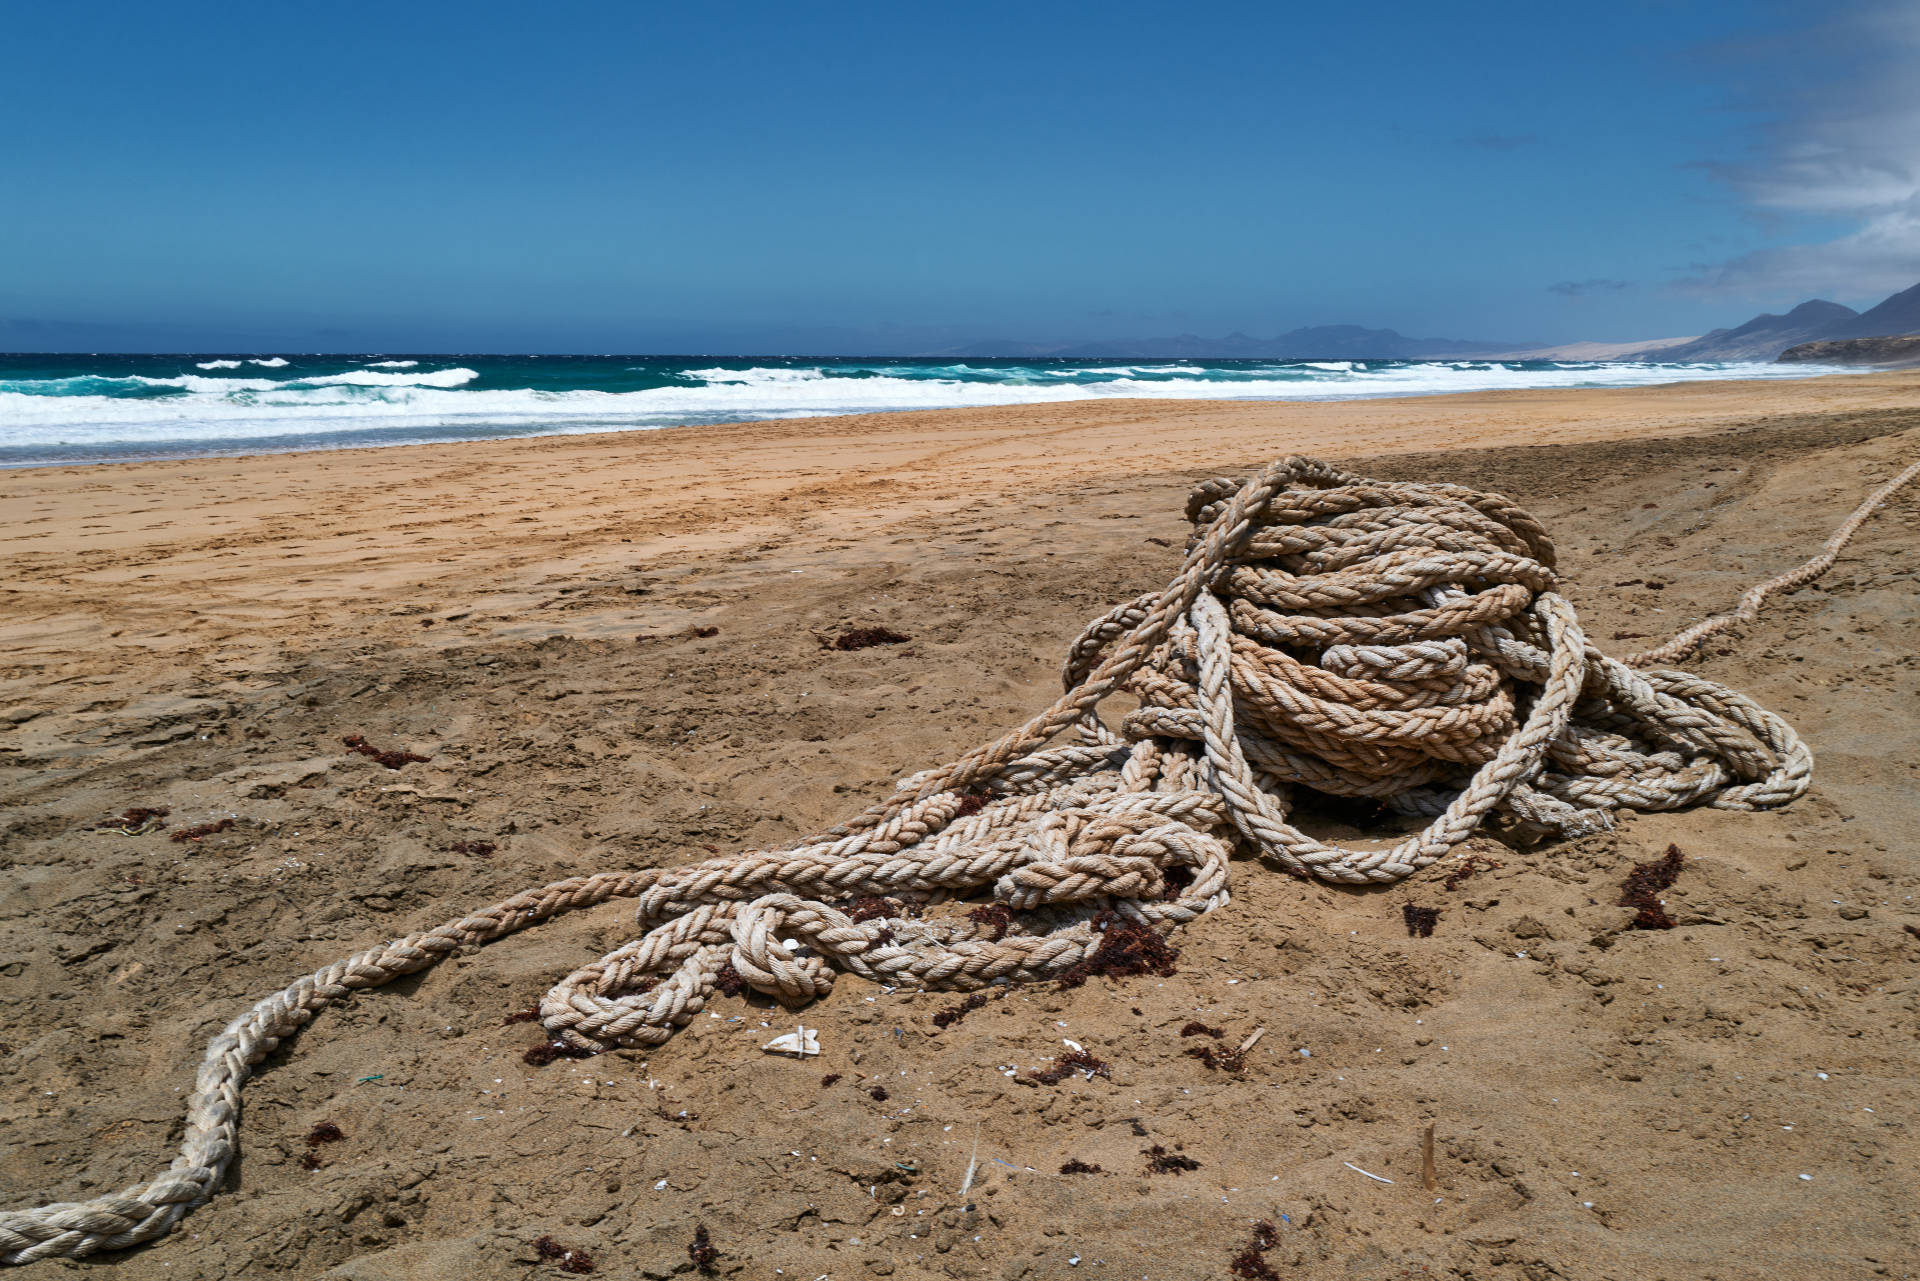 Playa de Cofete – kein Strandgut, Relikt illegaler Landnahme im Naturschutzgebiet.